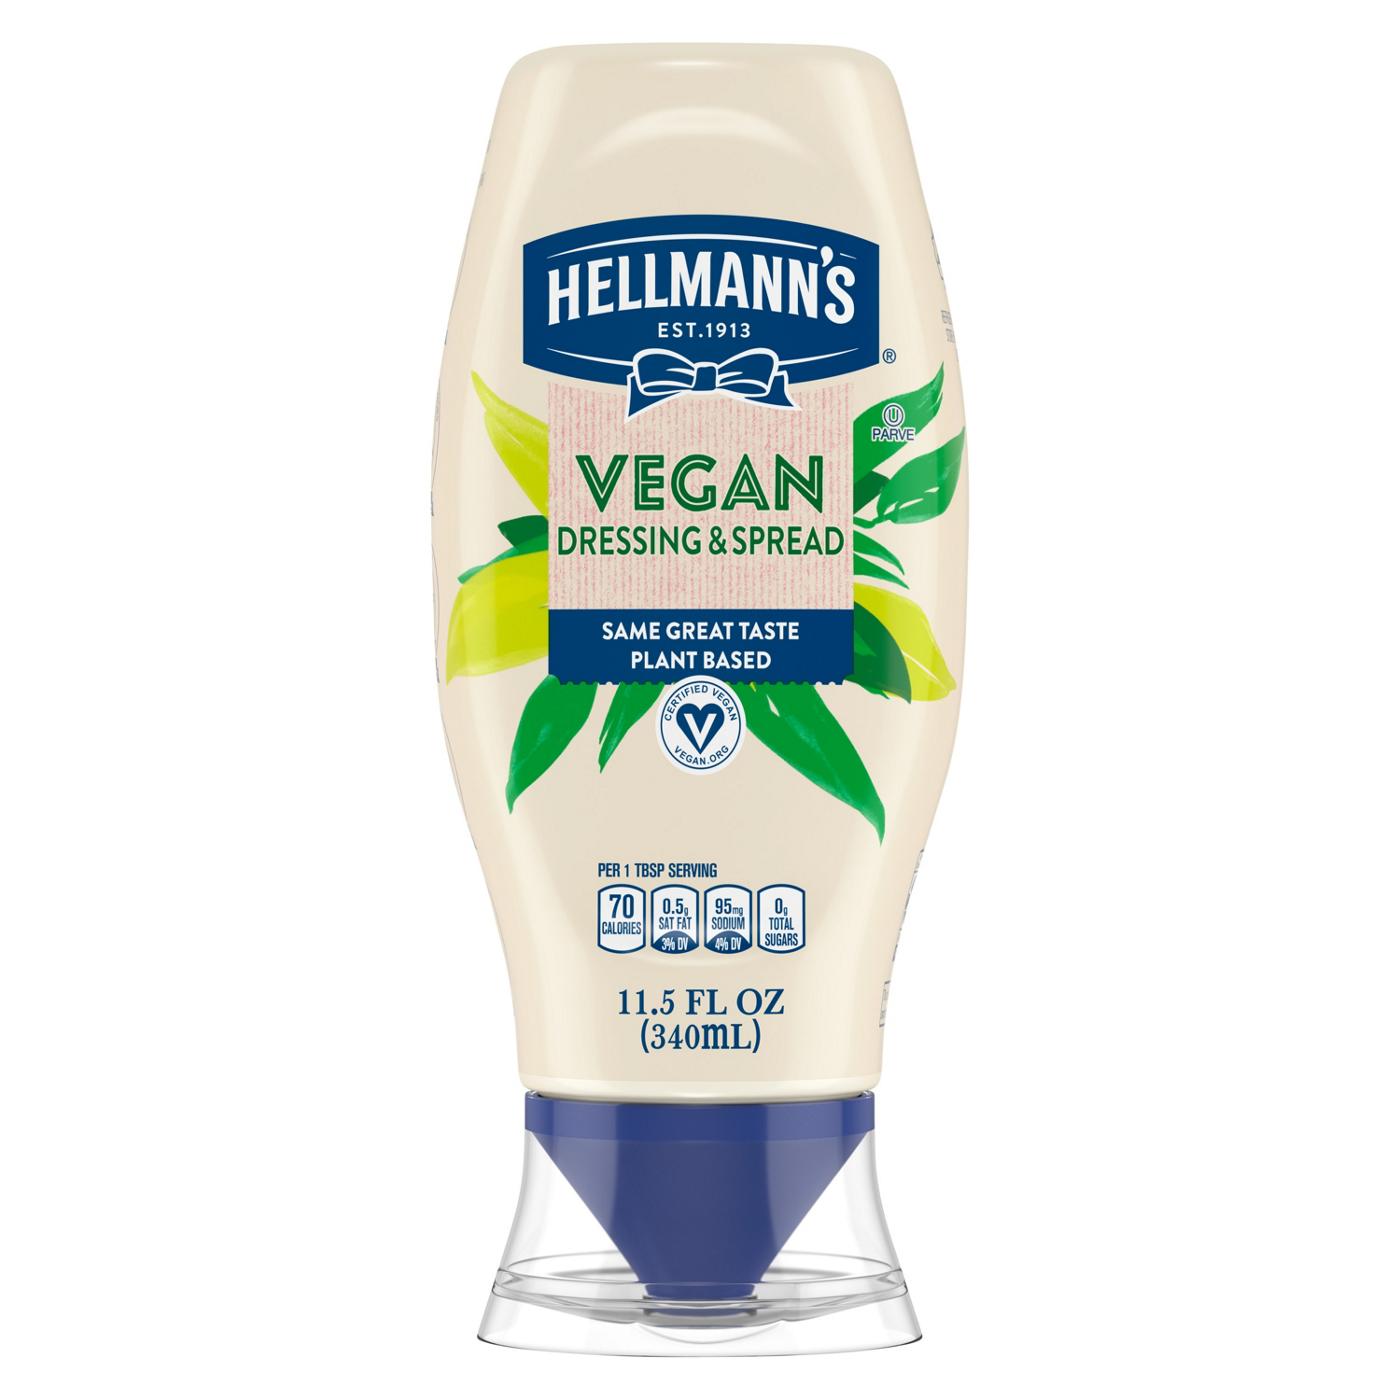 Hellmann's Vegan Dressing and Spread Vegan; image 1 of 6